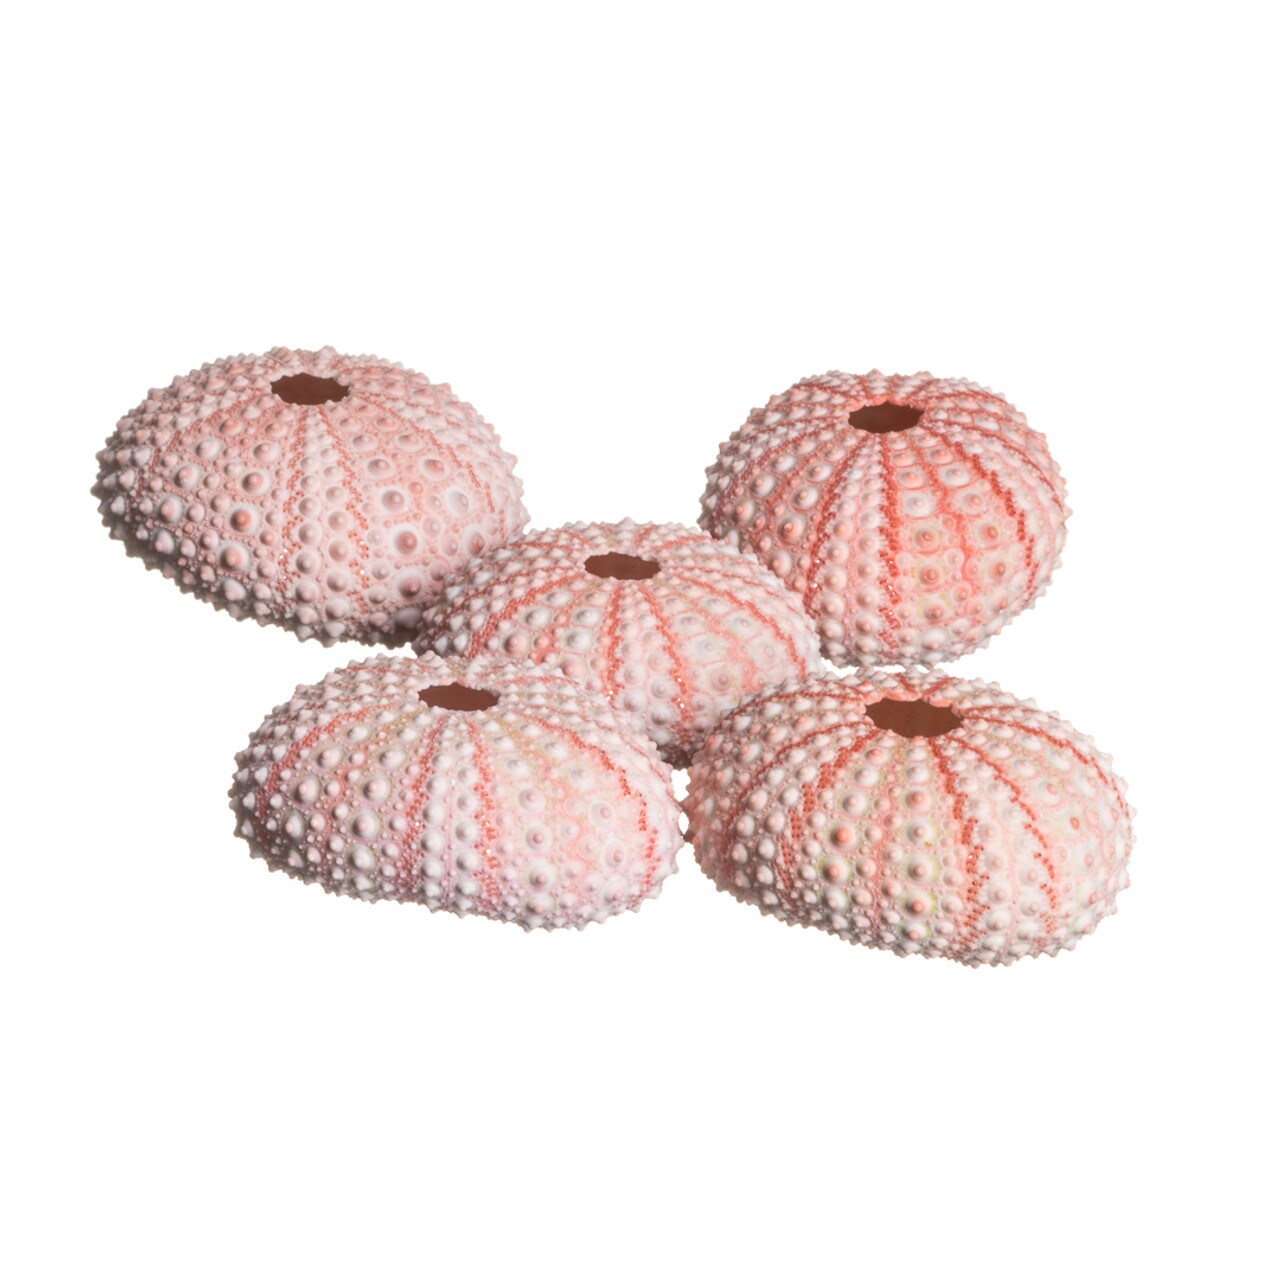 Sea Urchin 5 Pink Sea Urchin Shells 1&#x22;-2&#x22; for Crafts and Decor